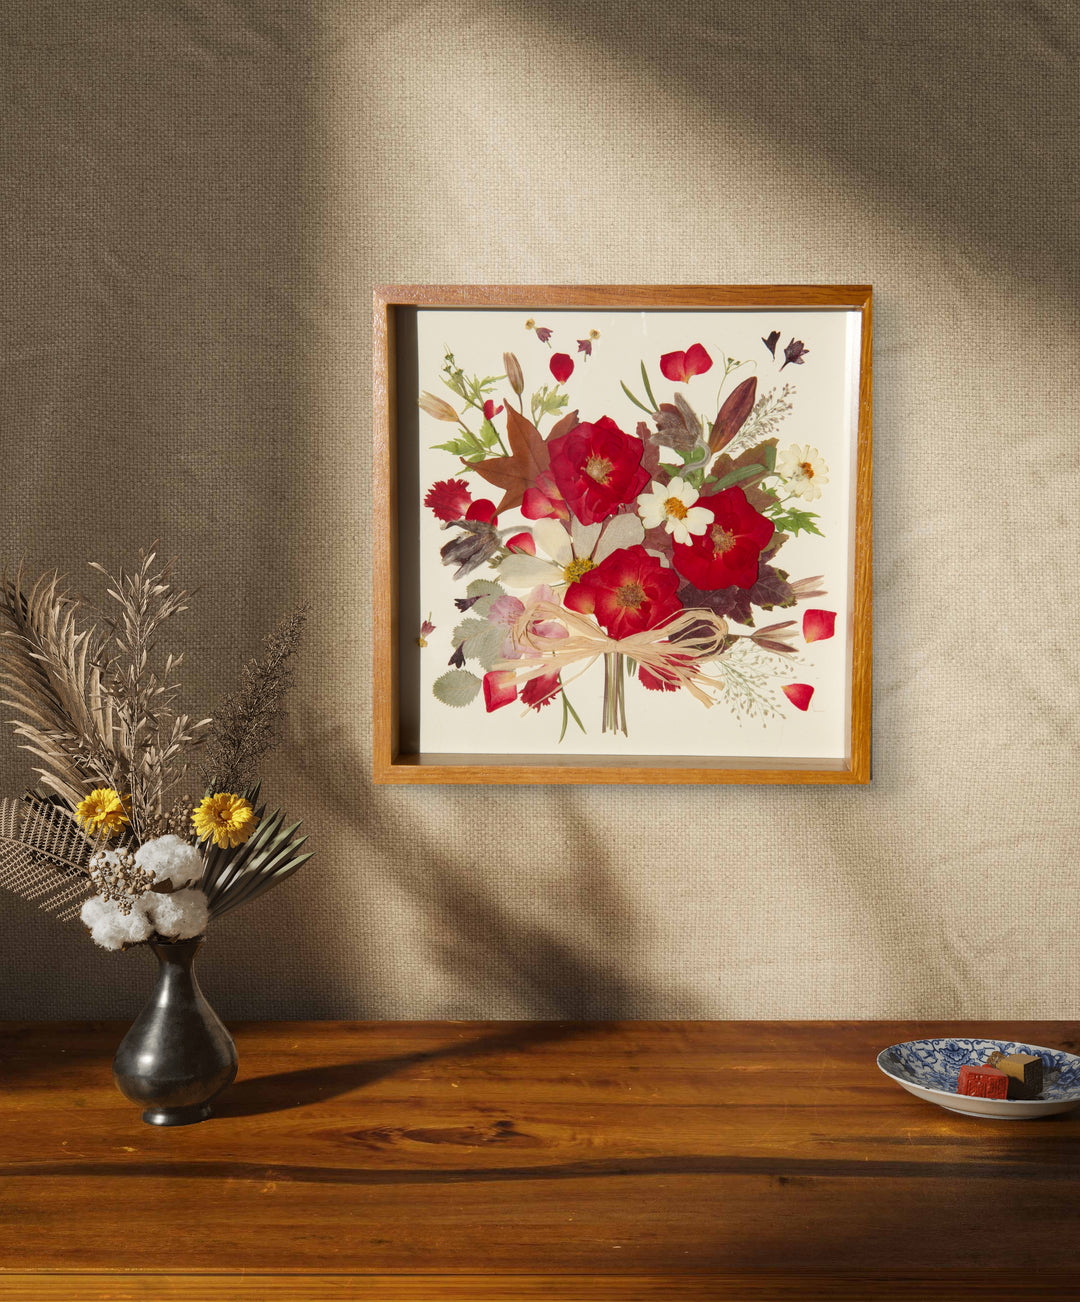 flower bouquet shaped red theme pressed flower frame art hanging above wood desk